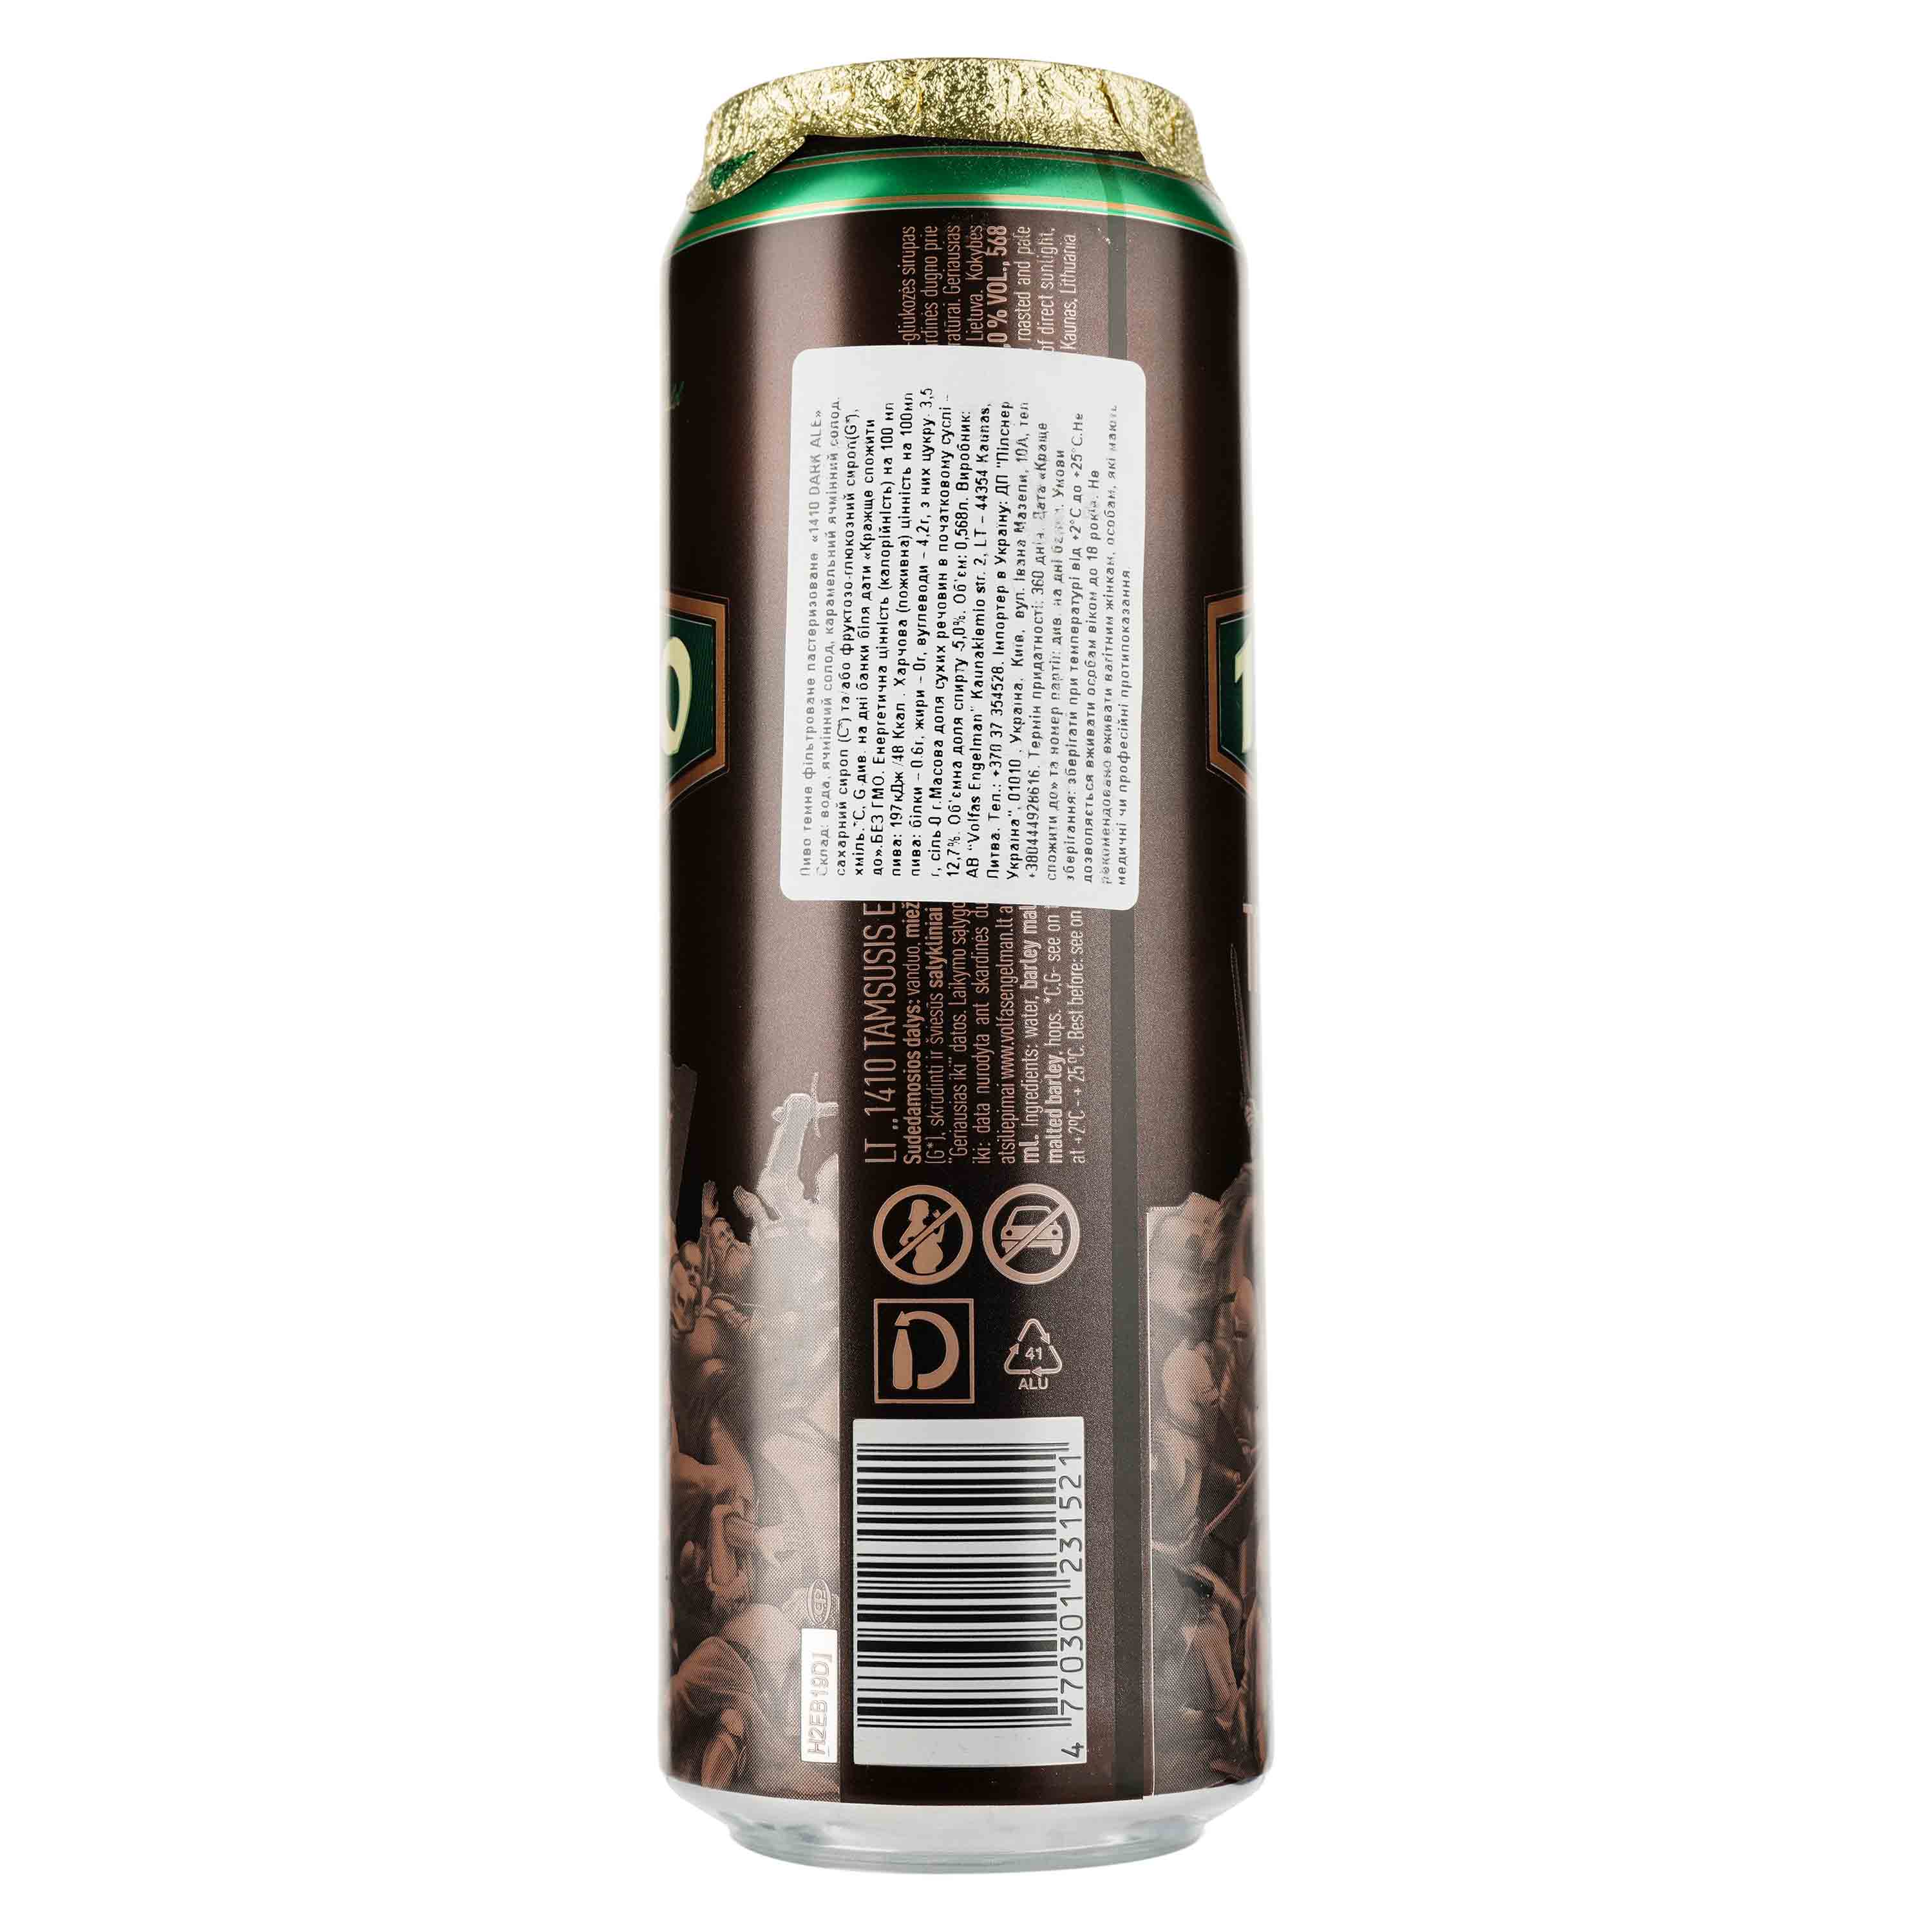 Пиво Volfas Engelman 1410 Tamsusis темное, 5%, ж/б, 0.568 л - фото 2